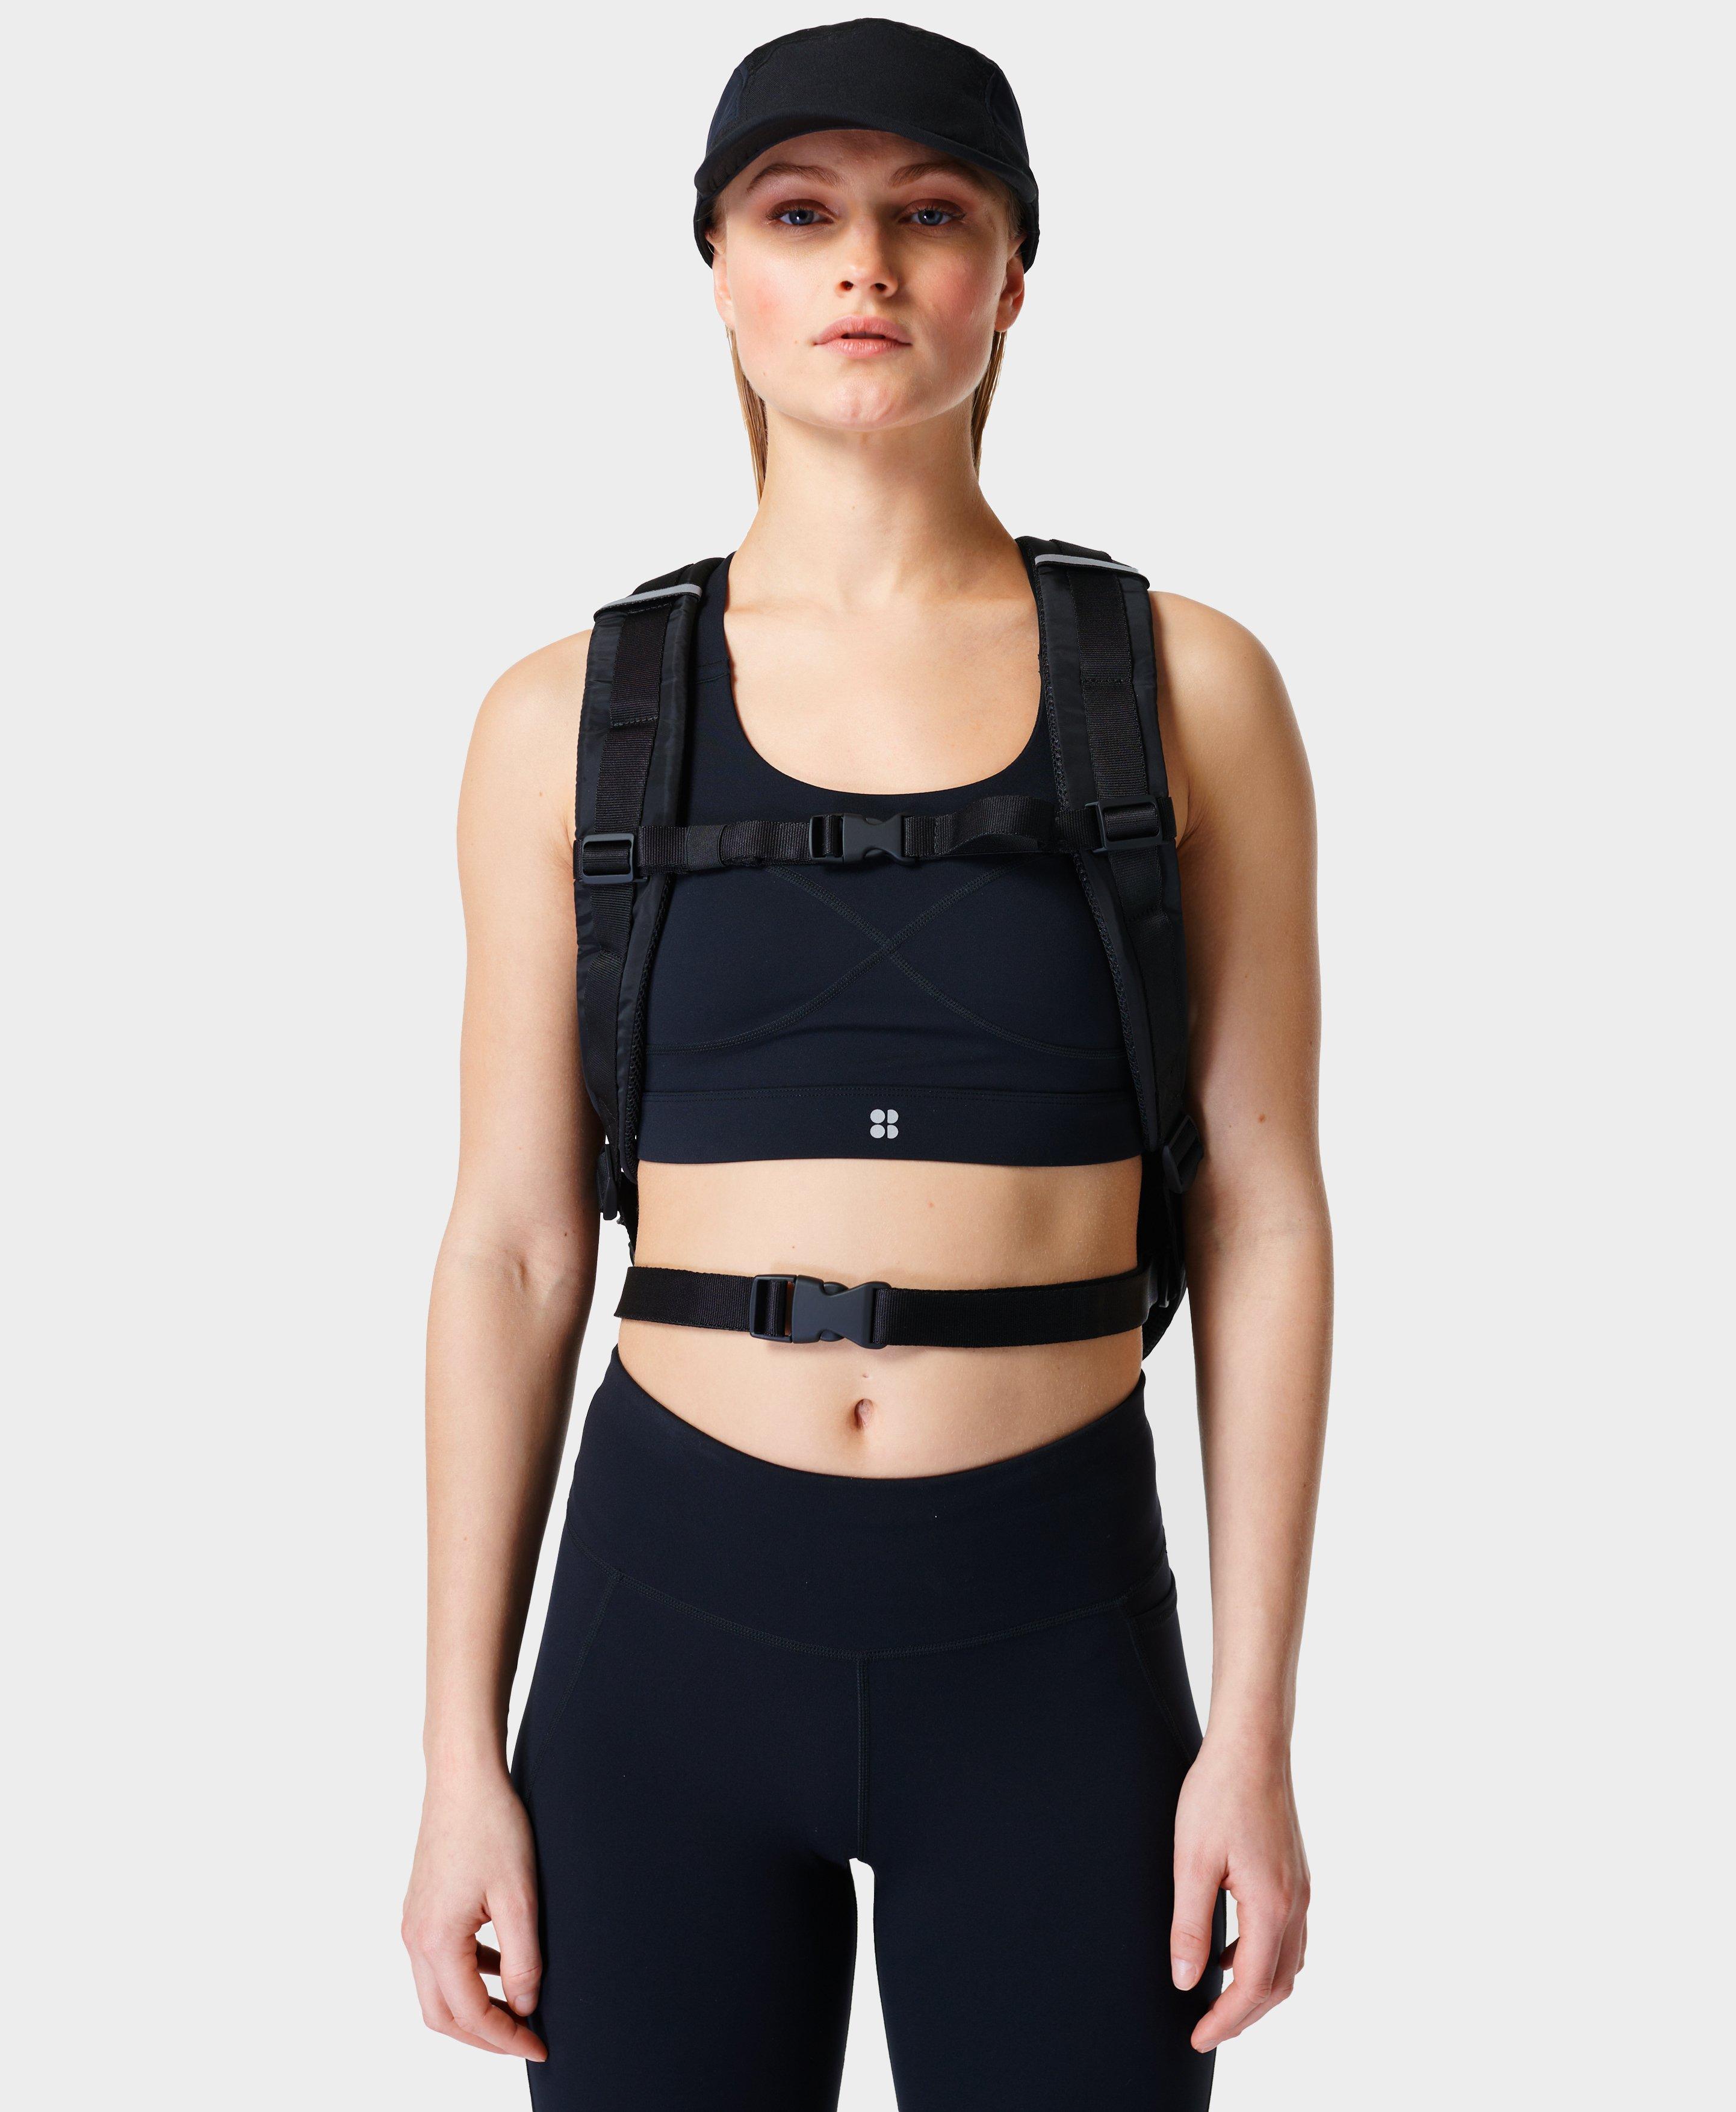 NWT Sweaty Betty gray multi use backpack yoga bag